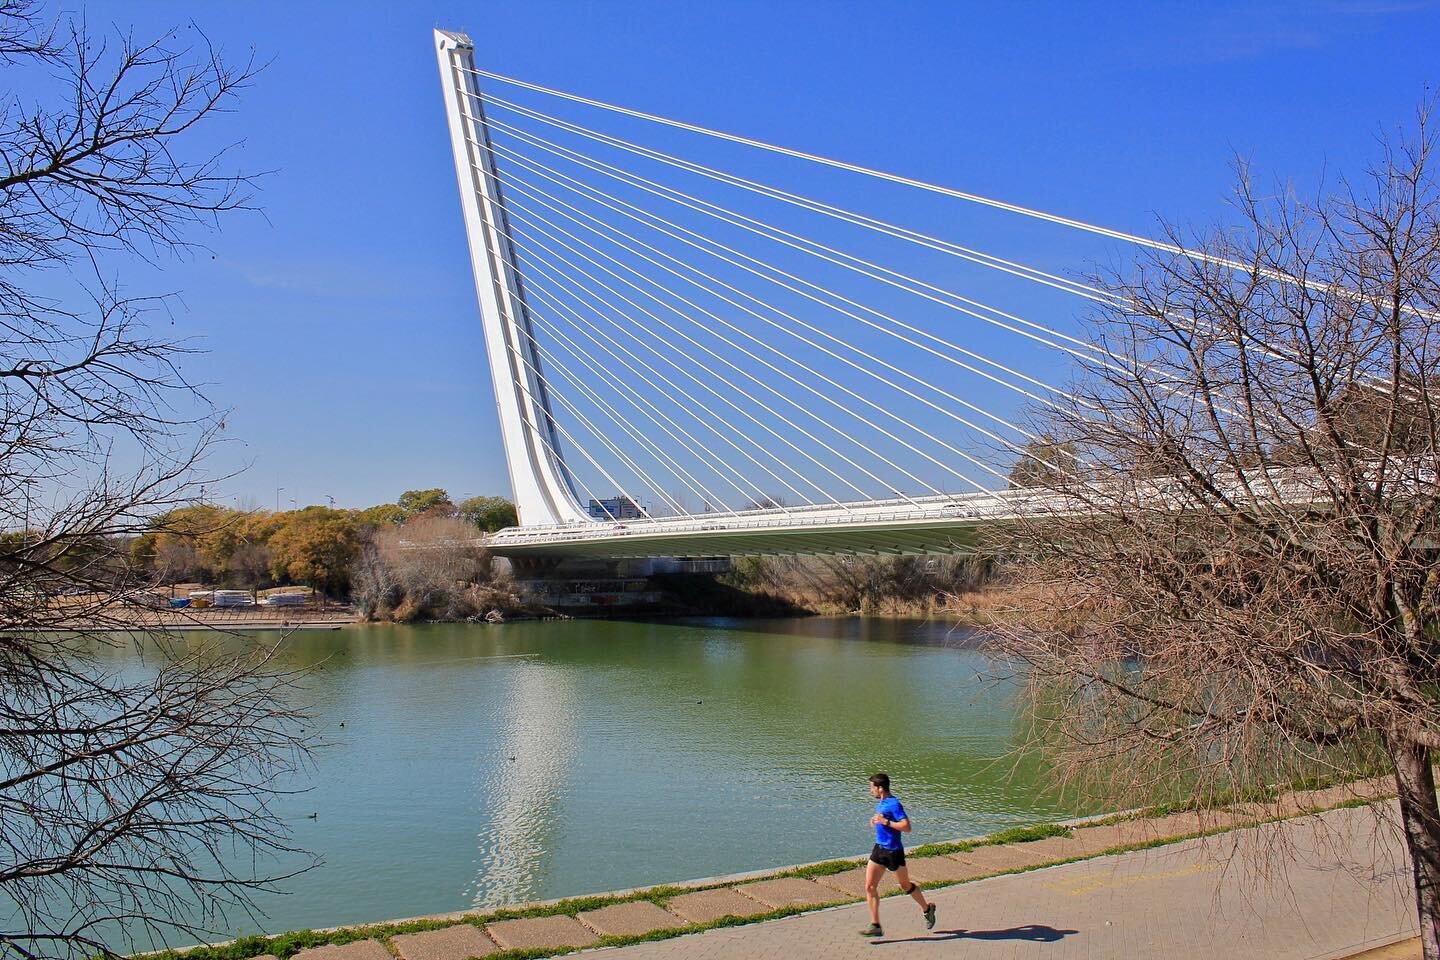 Bridge Bank  @calatravaofficial #tbt #alamillobridge #guadalquivirriver #structure #sculpture #sevilla #rotchtravel_ck